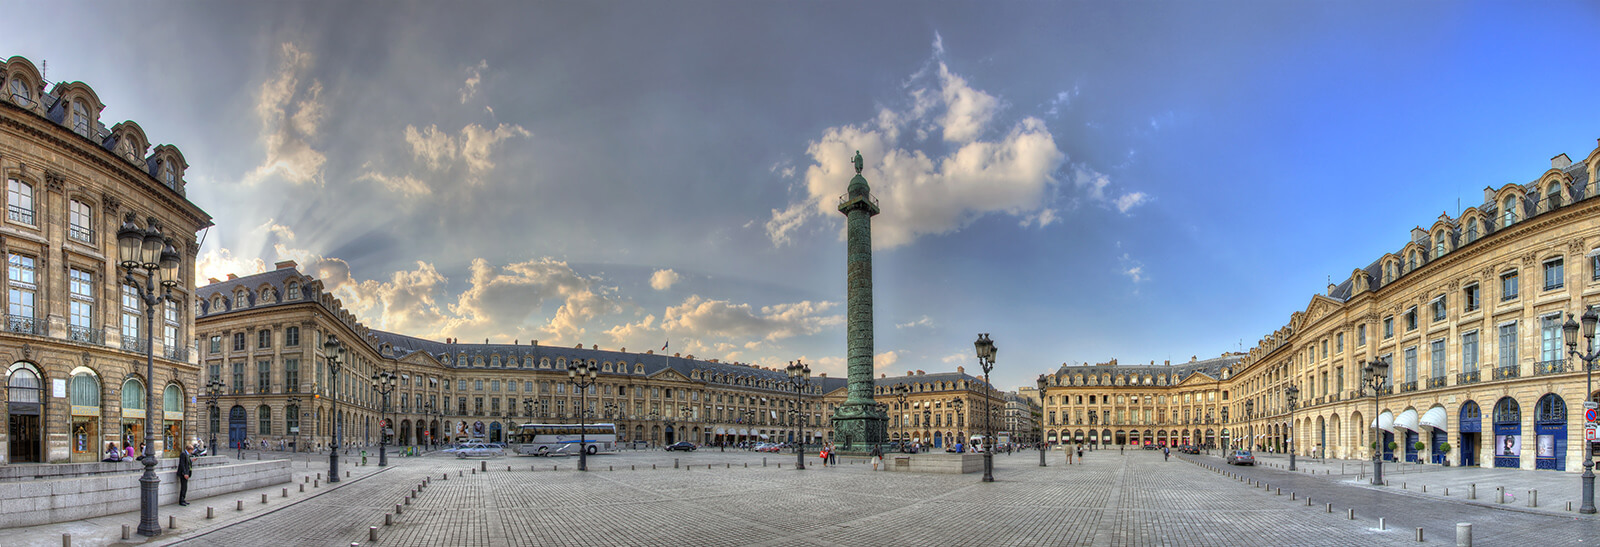 The Horological History Of Place Vendôme, Paris - Reprise - Quill & Pad